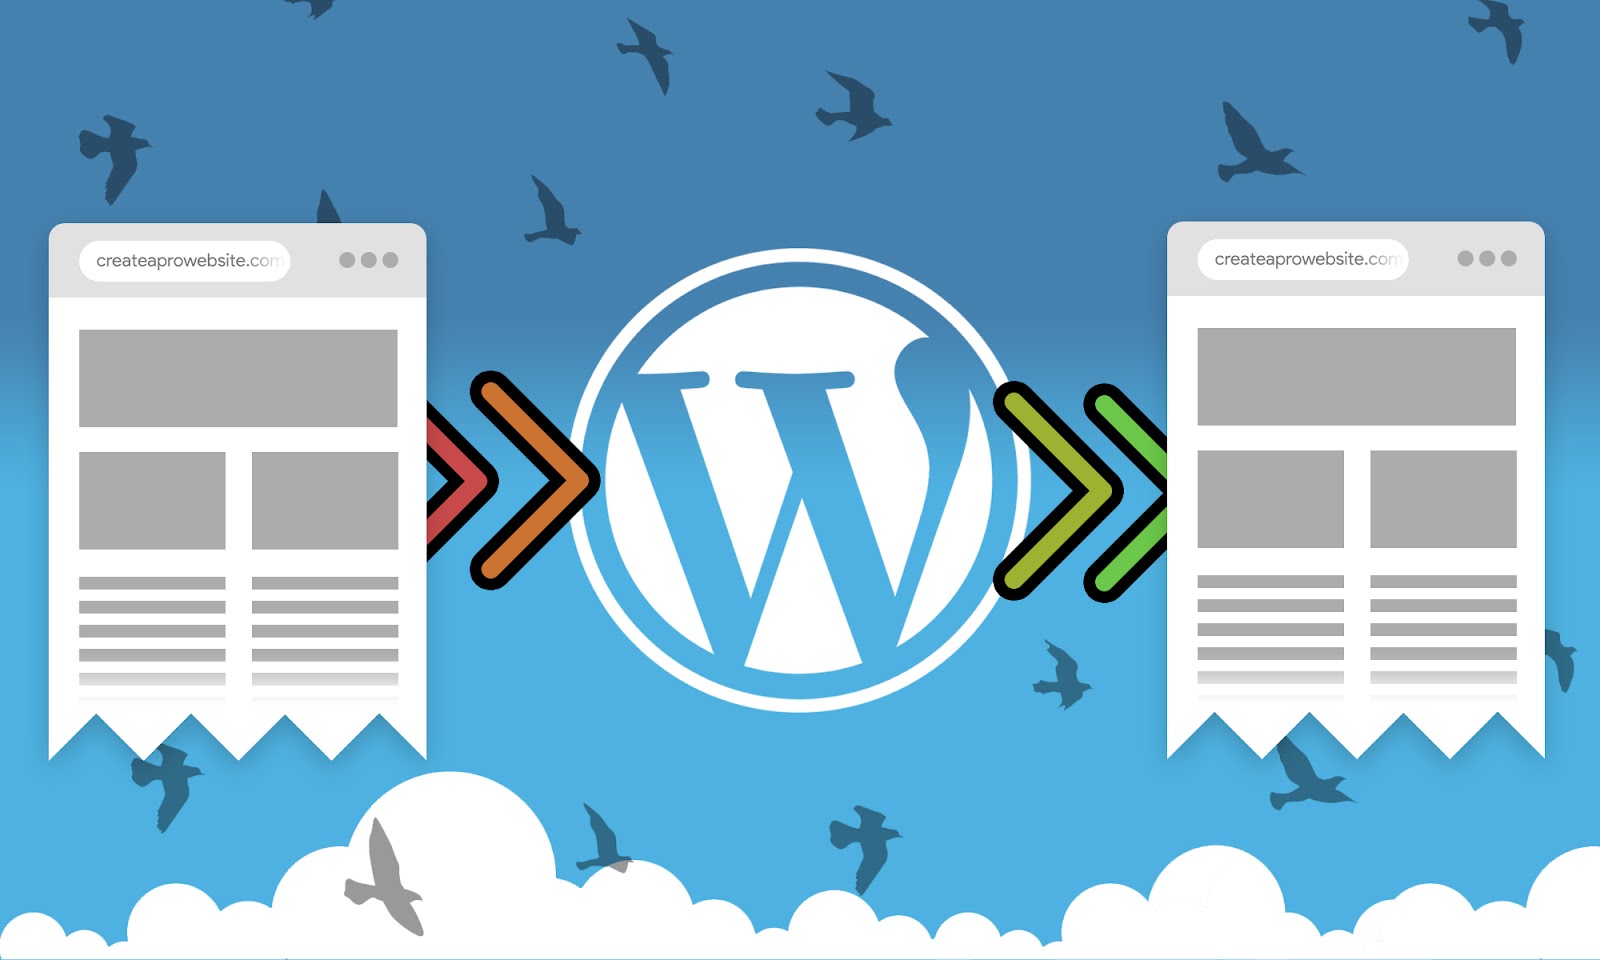 Best WordPress migration plugins